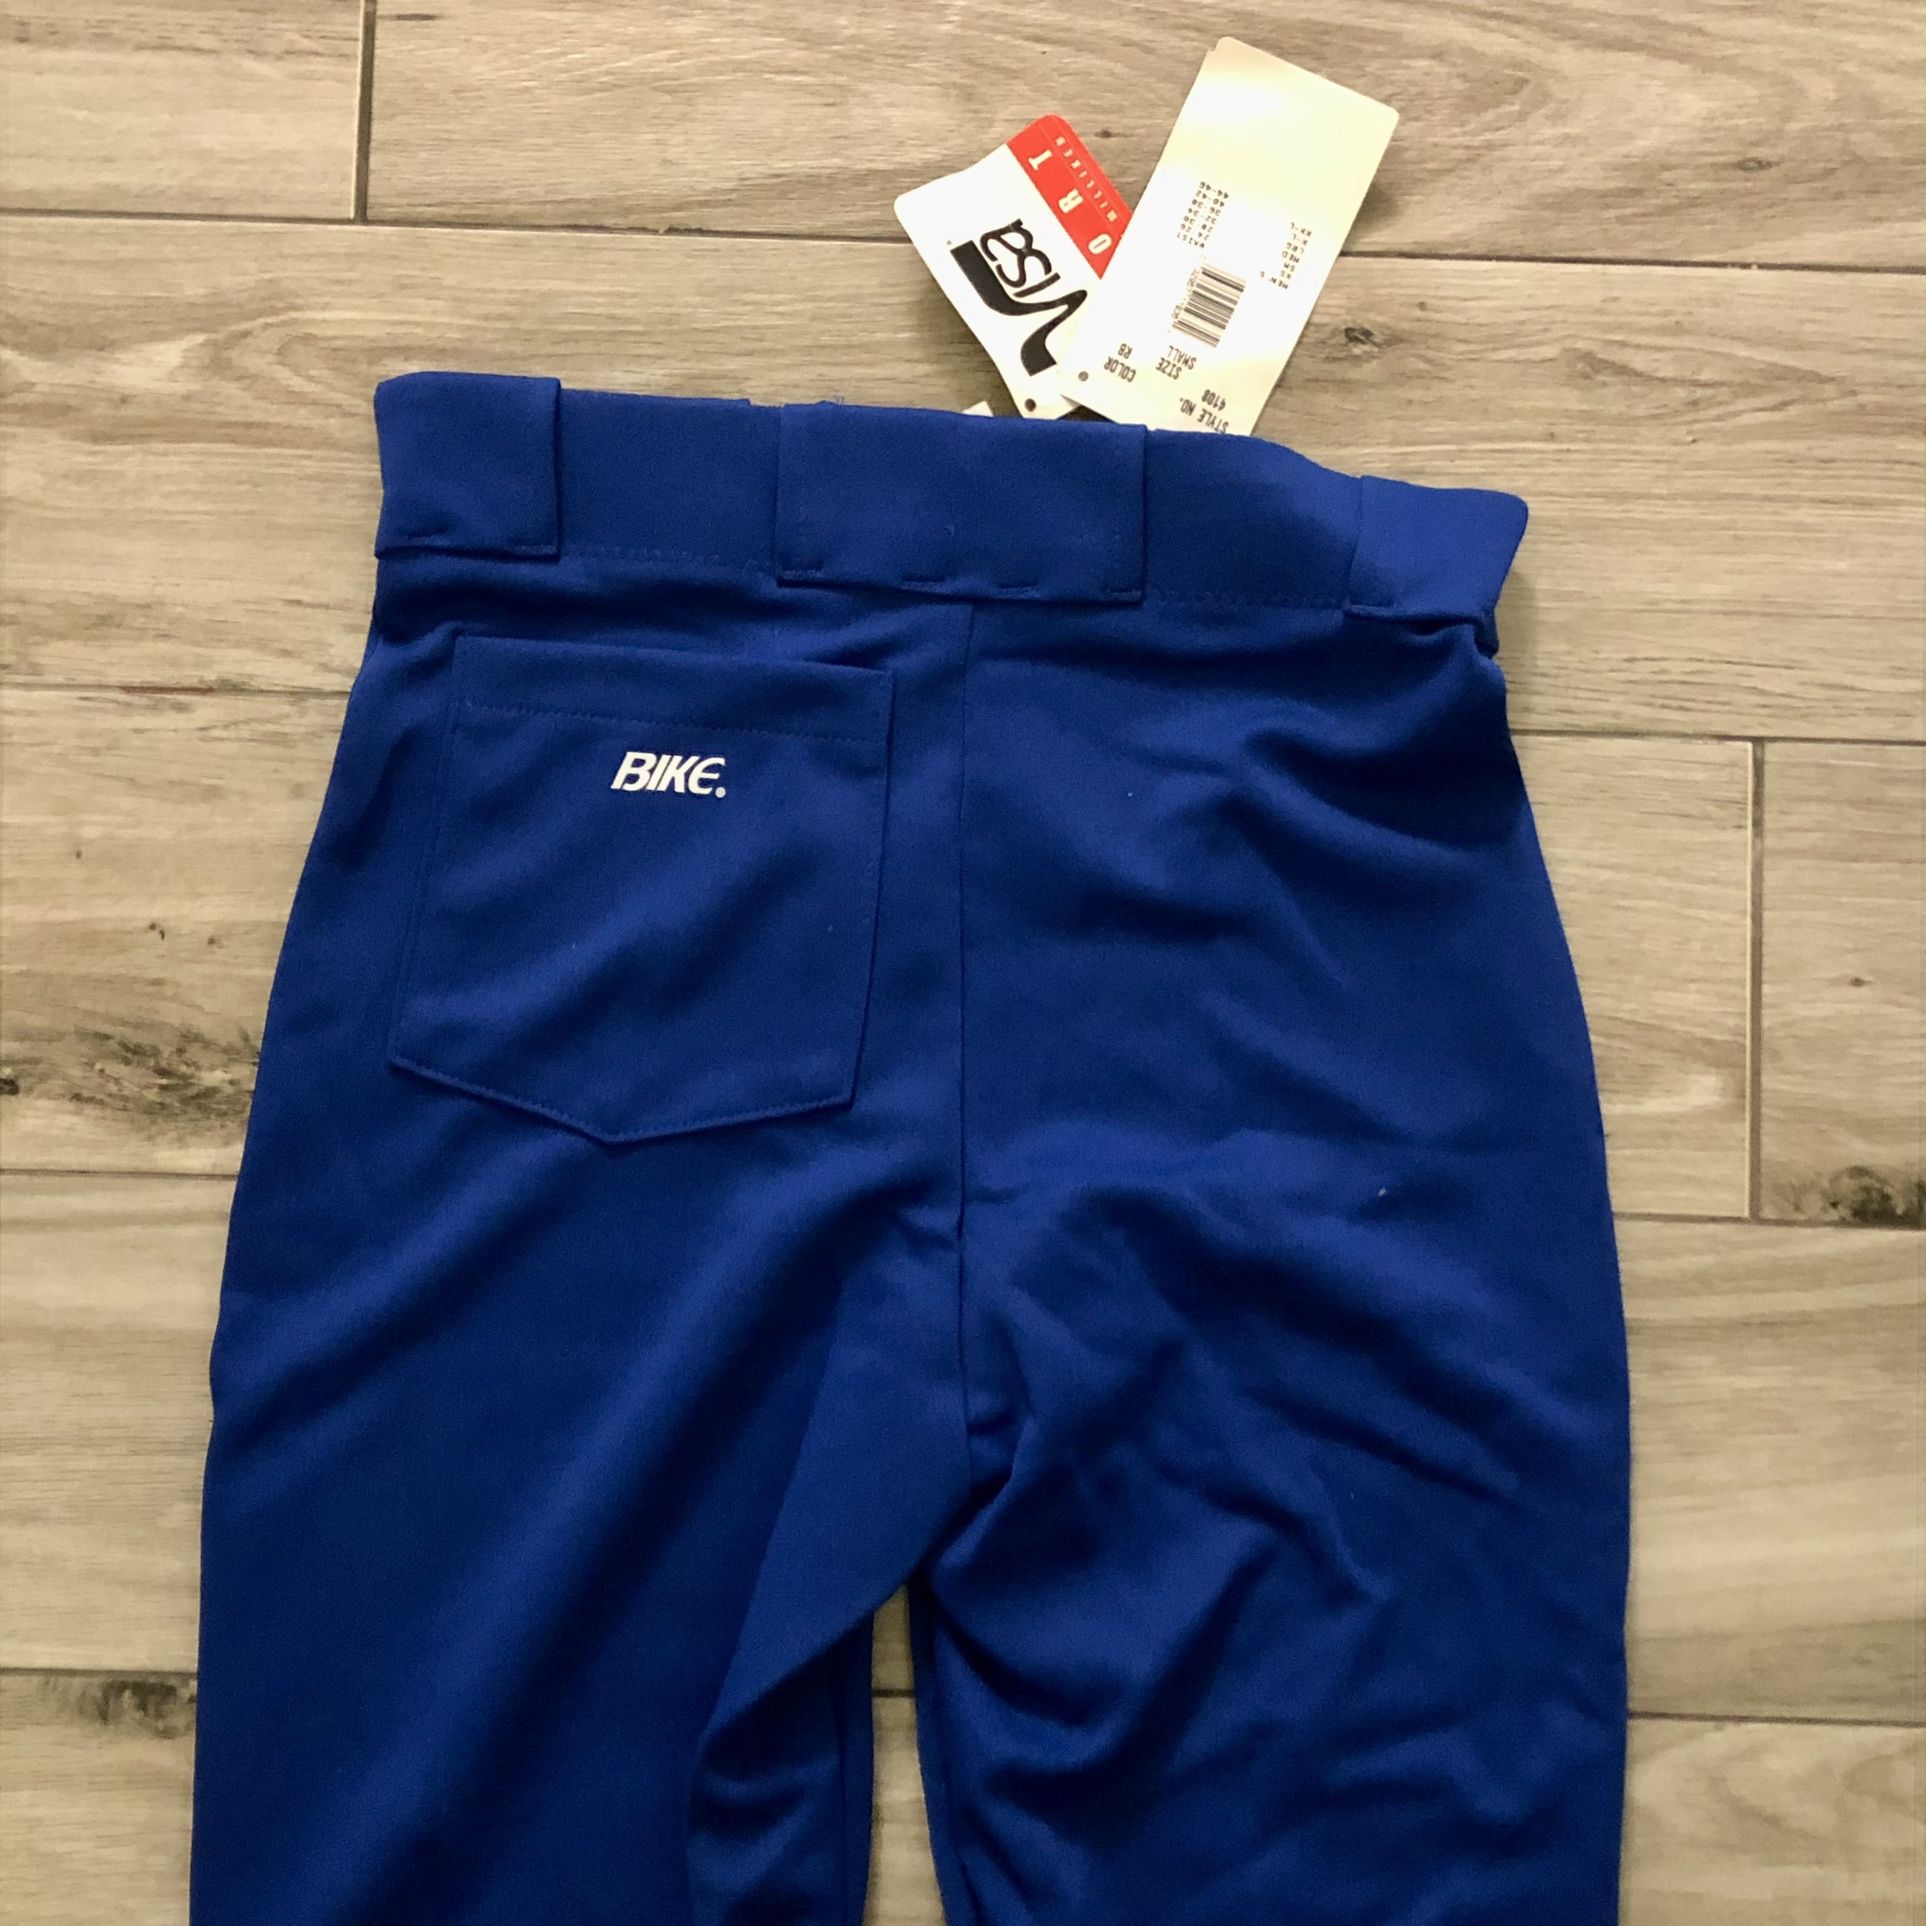 Bike Athletic Style 4108 Blue Adult Baseball Pants w/Belt Loops Size Small NEW